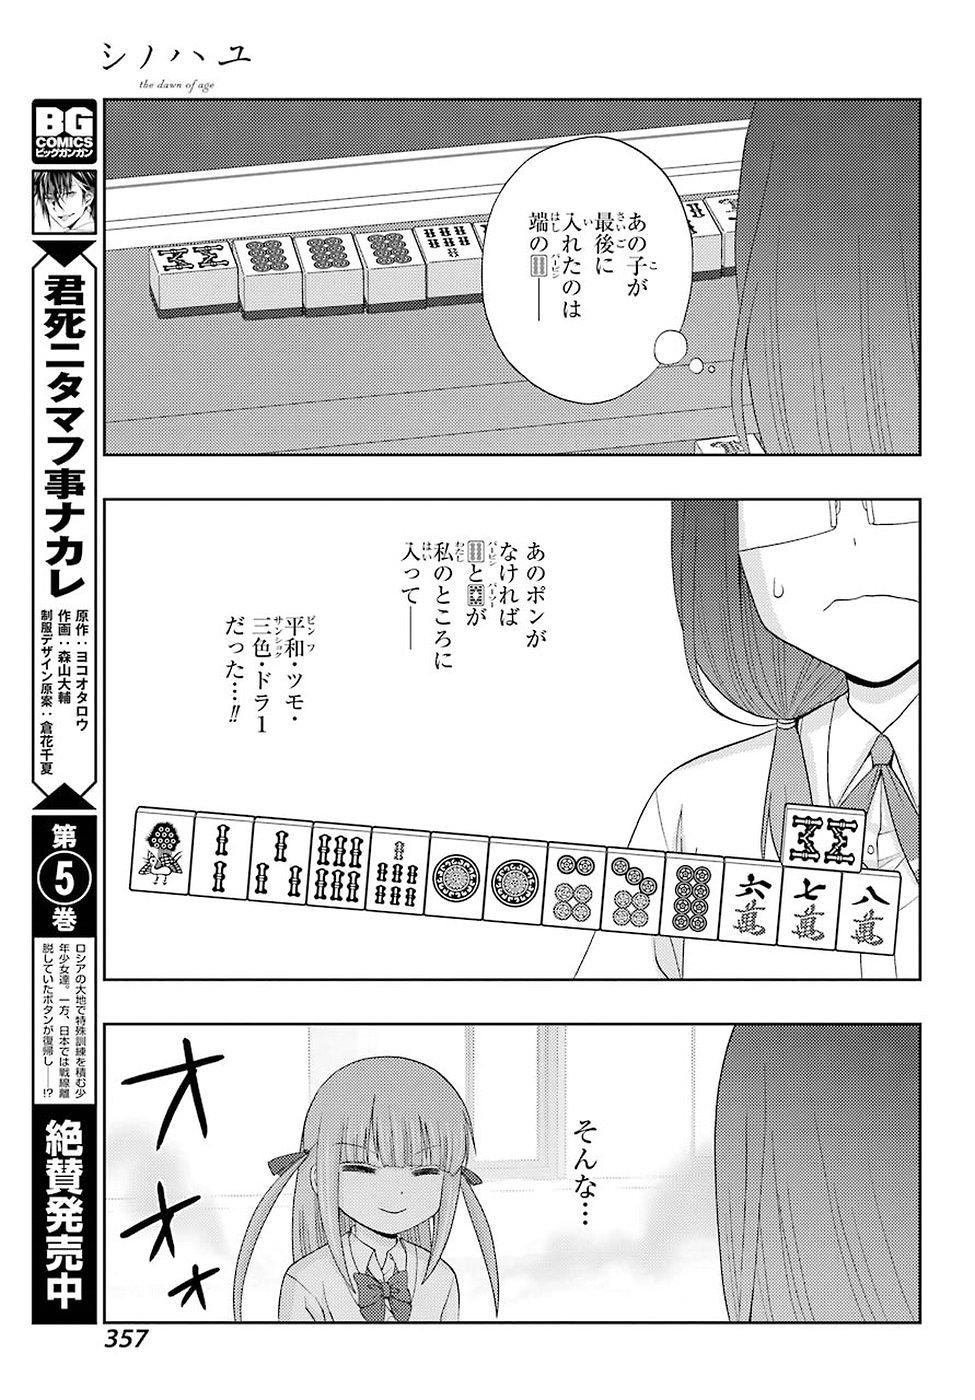 Shinohayu - The Dawn of Age Manga - Chapter 052 - Page 19